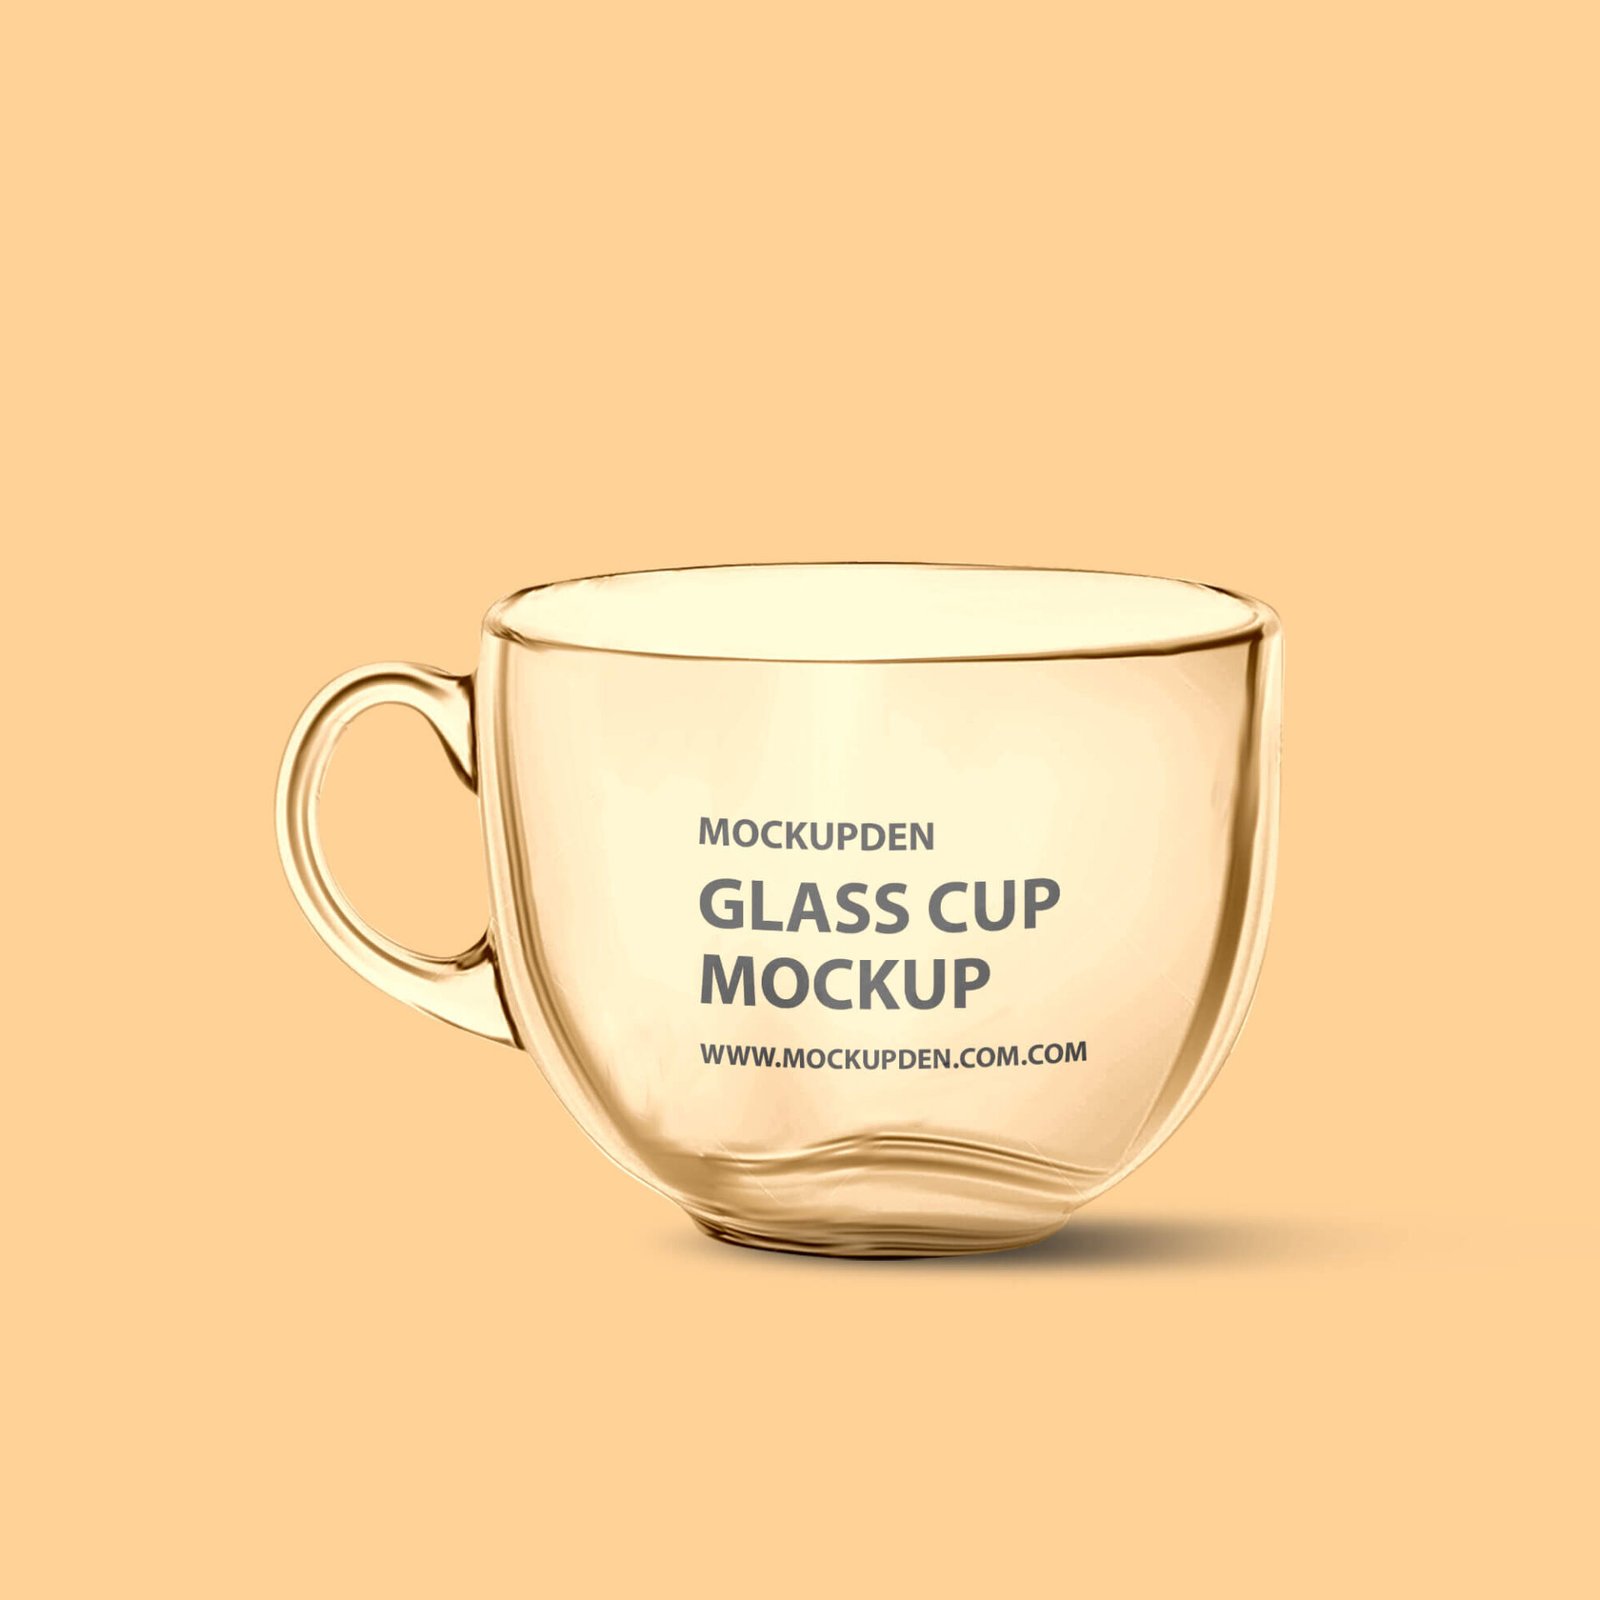 Free Glass Cup Mockup PSD Template - Mockup Den